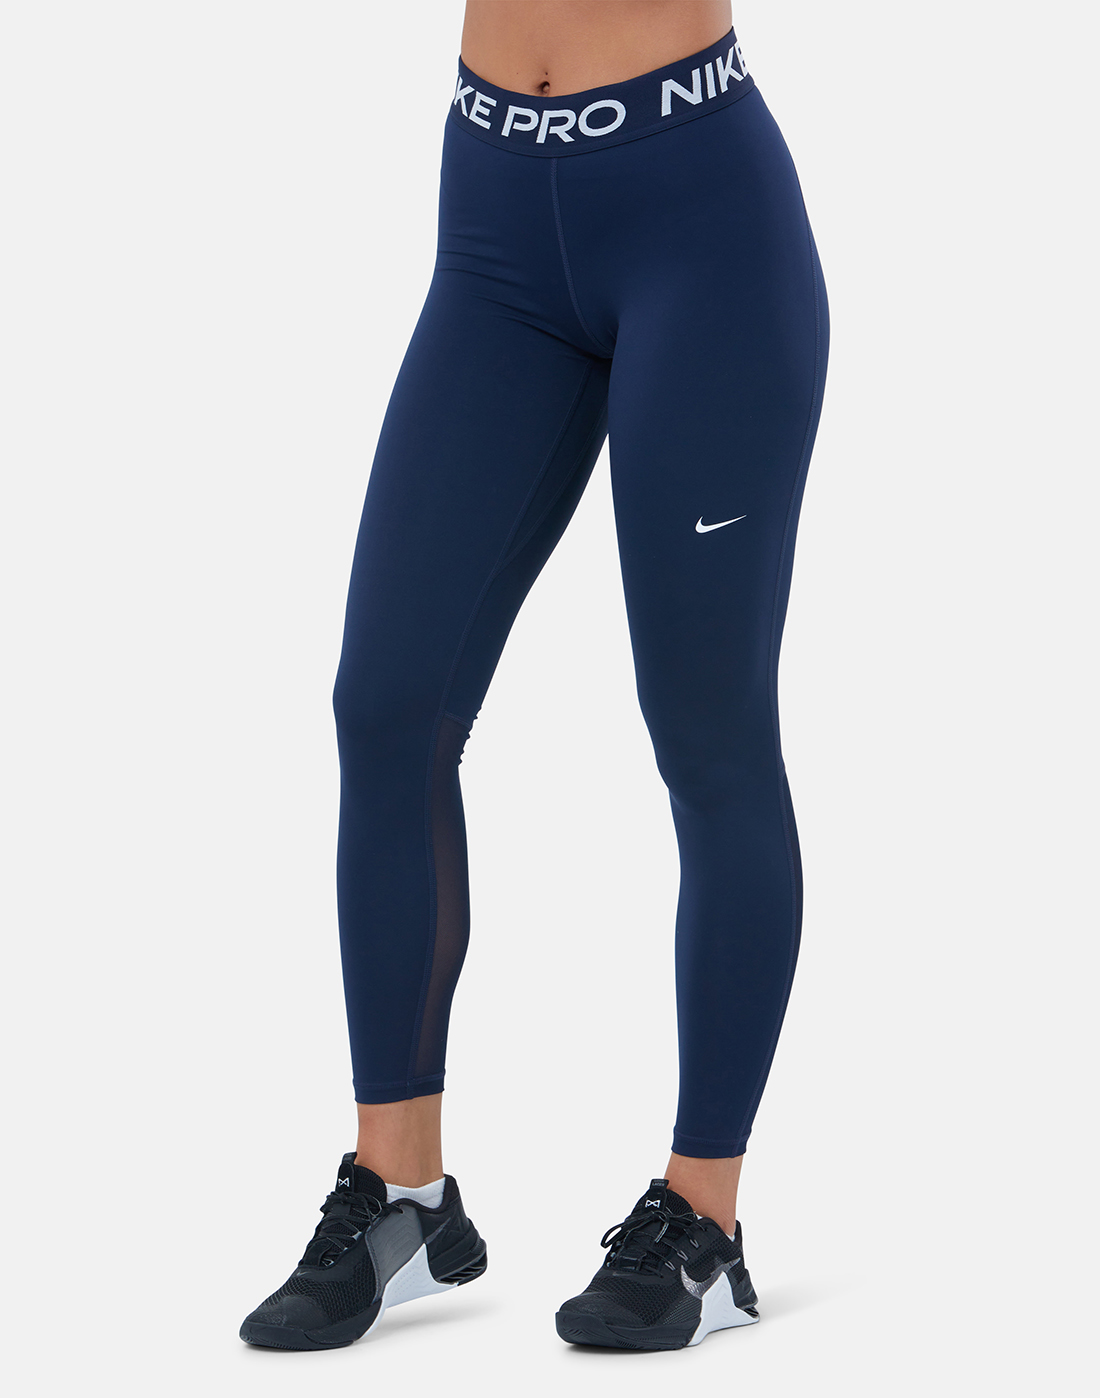 Nike Womens Pro 365 Leggings - Black | Life Style Sports IE